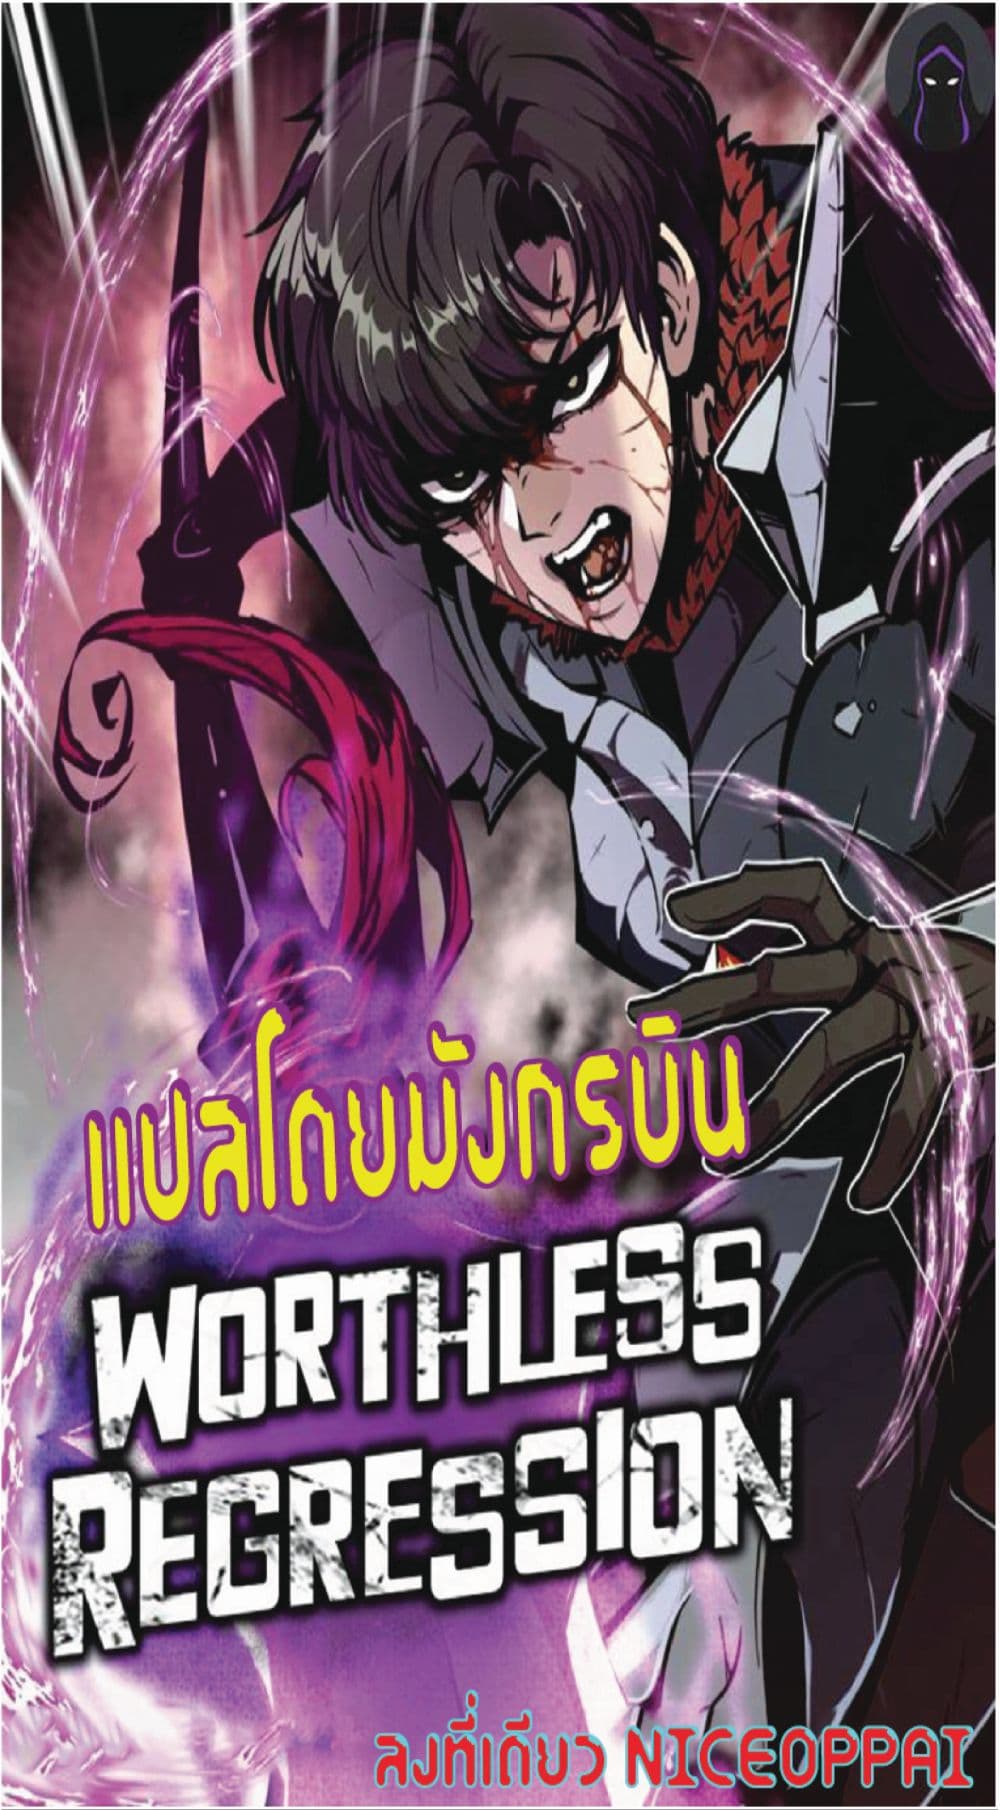 Worthless Regression19 01